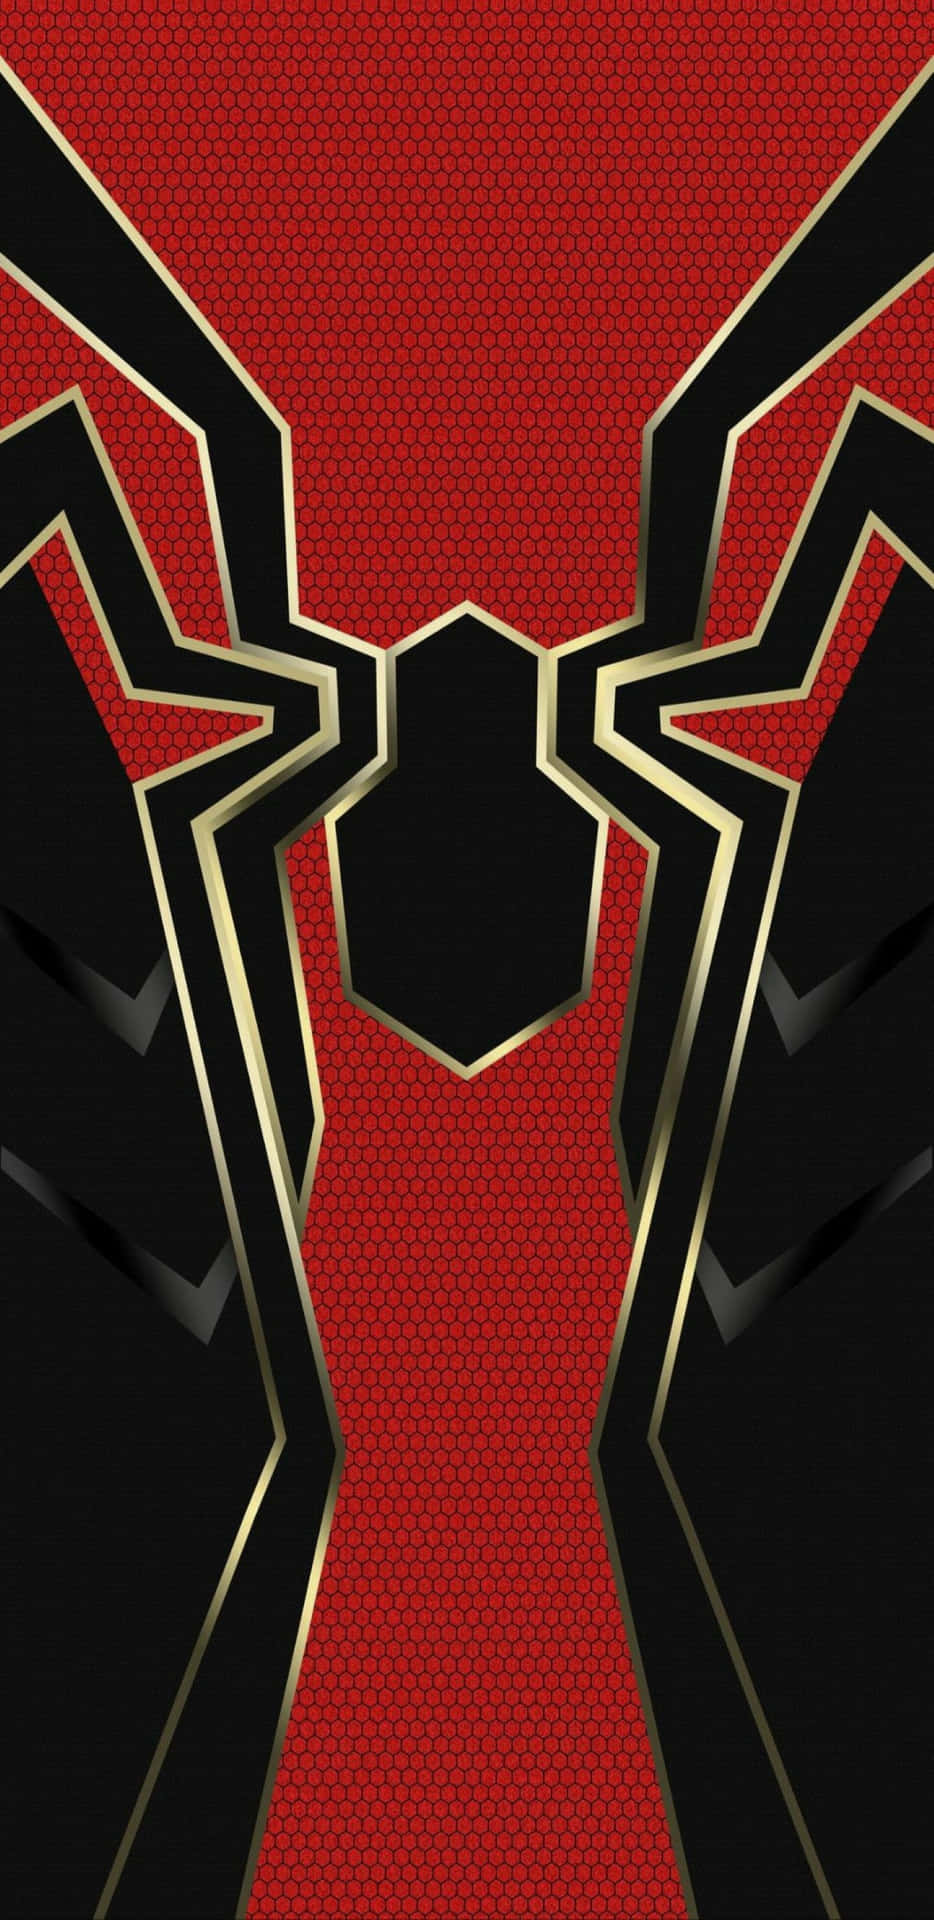 Fondode Pantalla De Pixel 3xl De Iron Spider Suit De Marvel